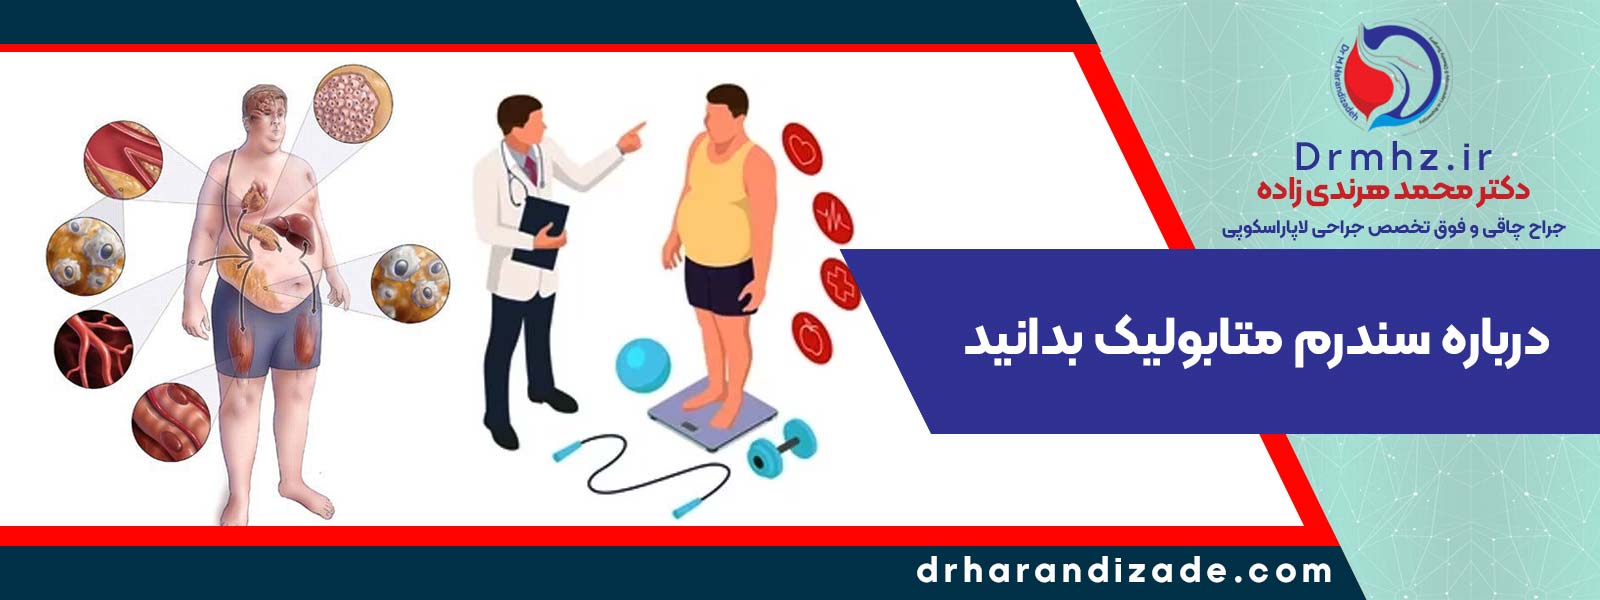 1401 05 metabolic درمان بیماری سندرم متابولیک در اصفهان syndrome - بهترین دکتر لاغری در اصفهان